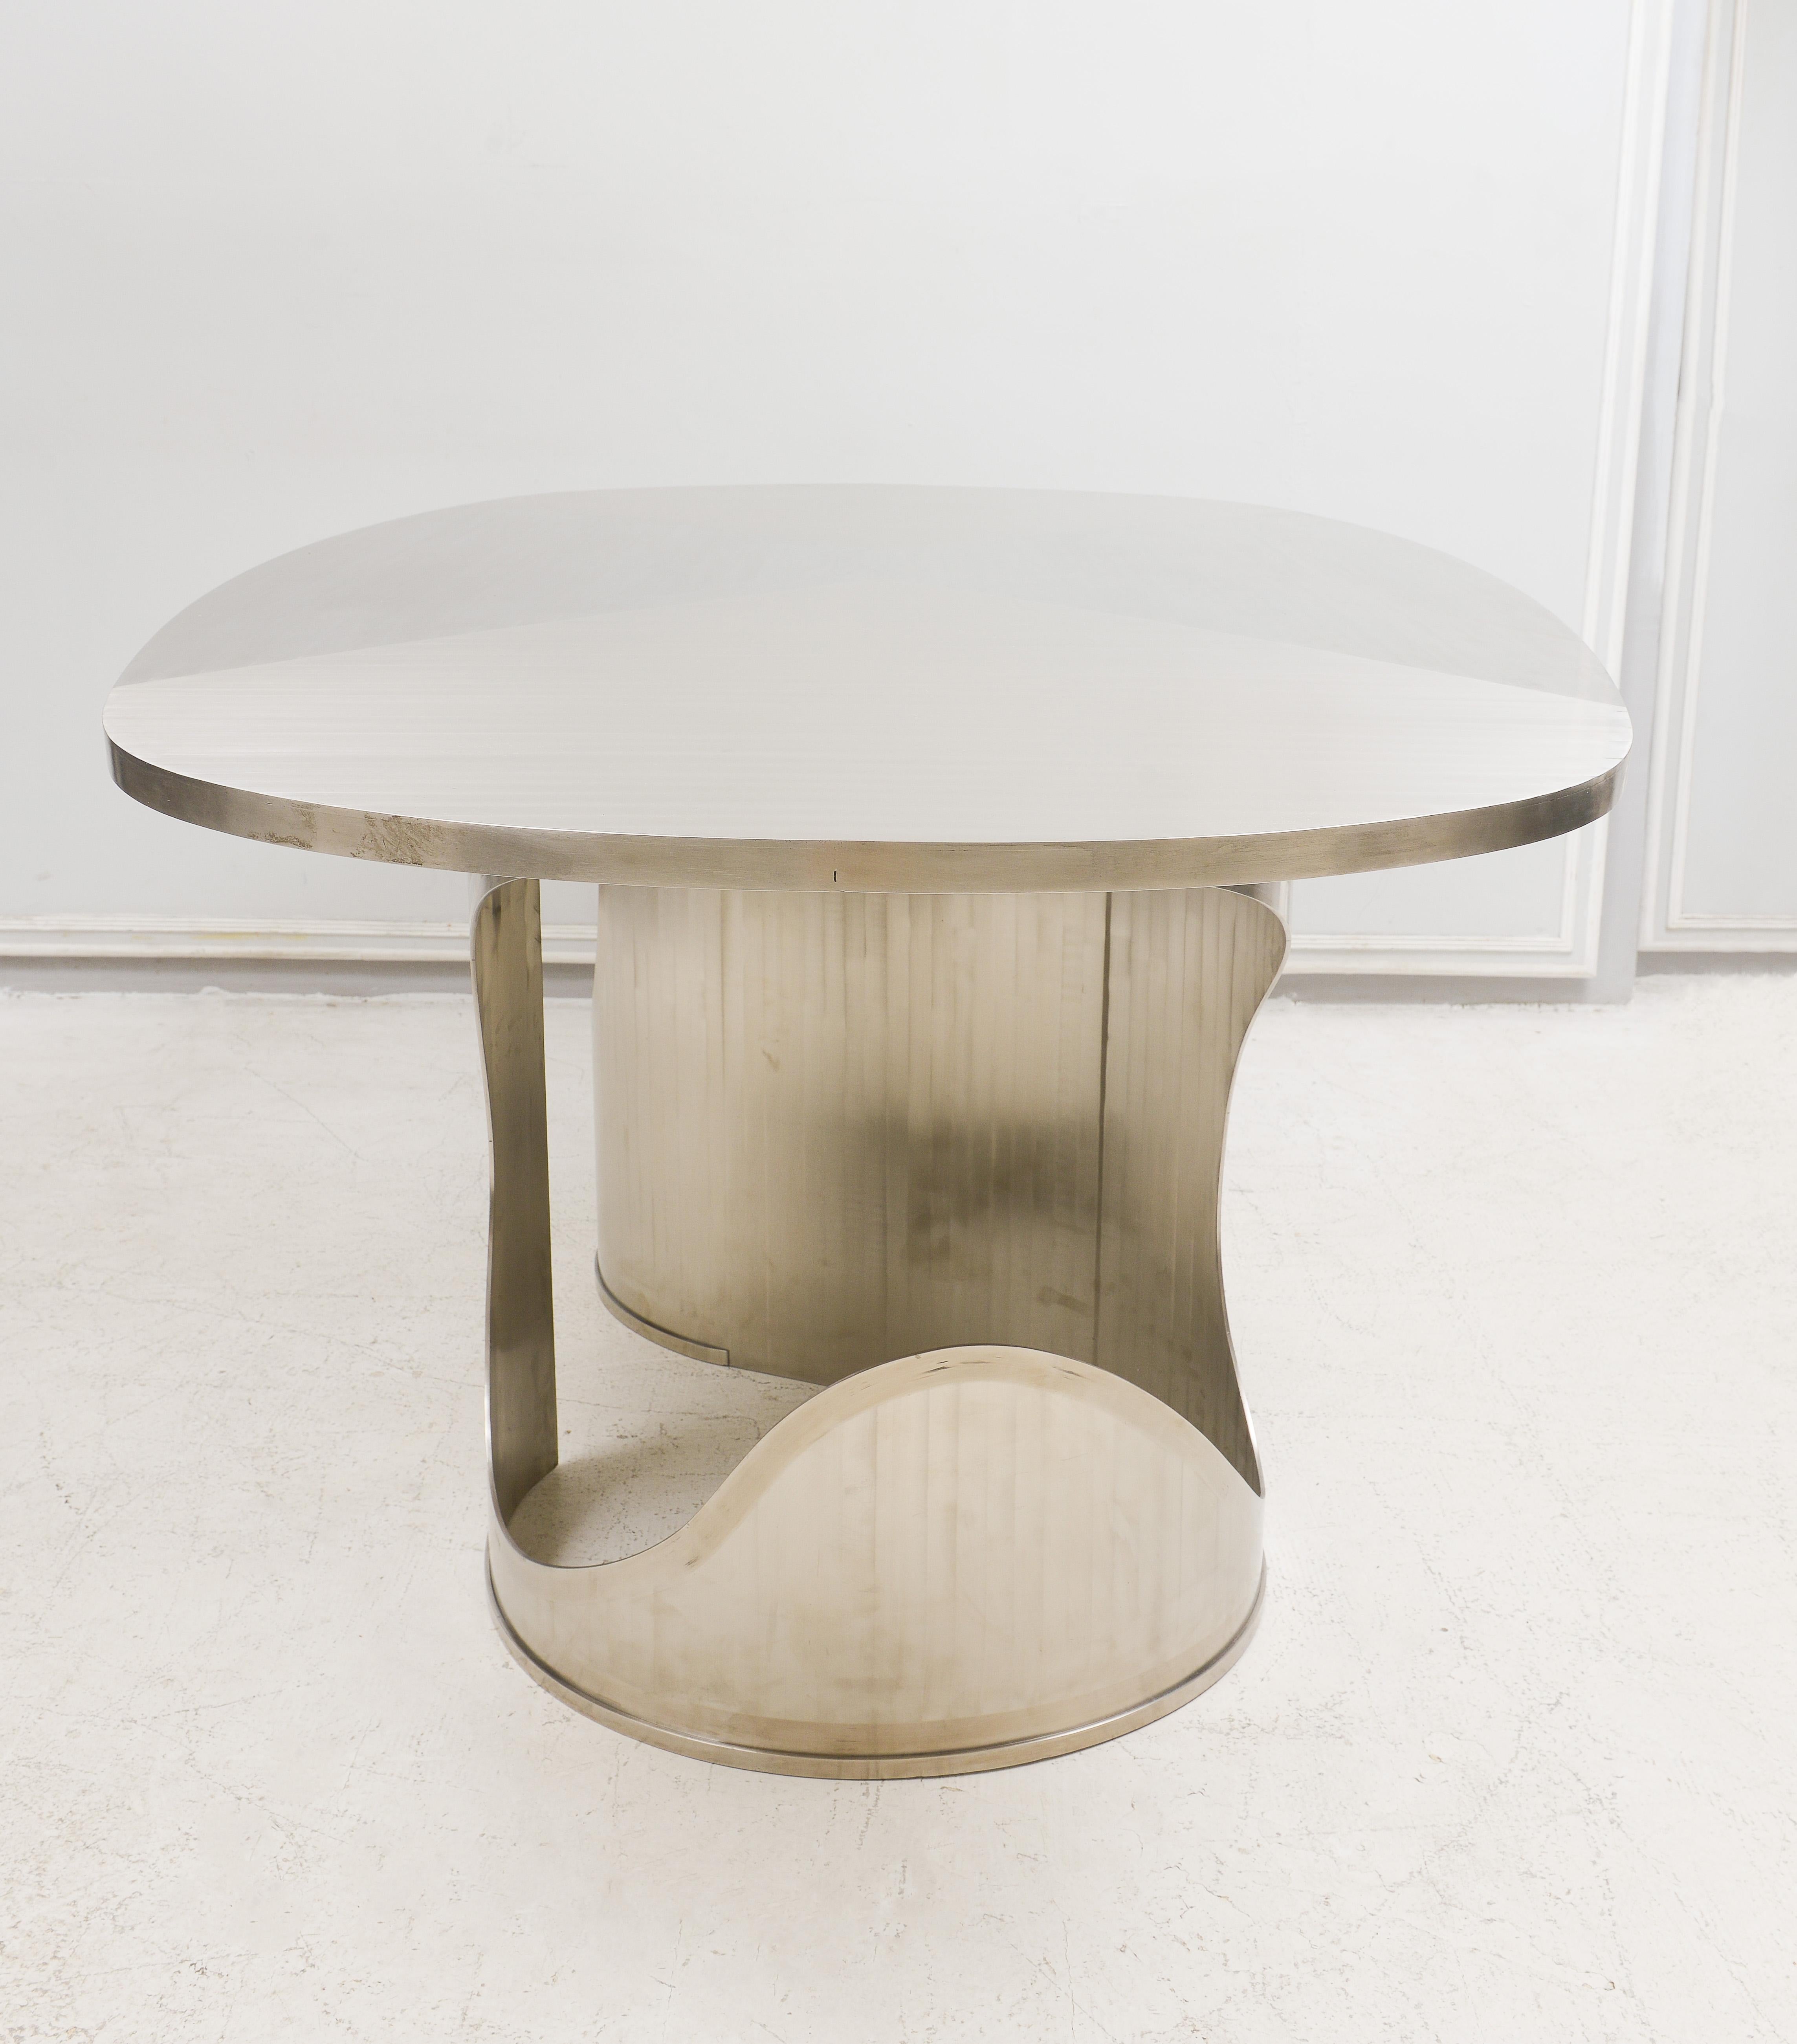 Table sculpturale en acier inoxydable à la manière de Maria Pergay en vente 1